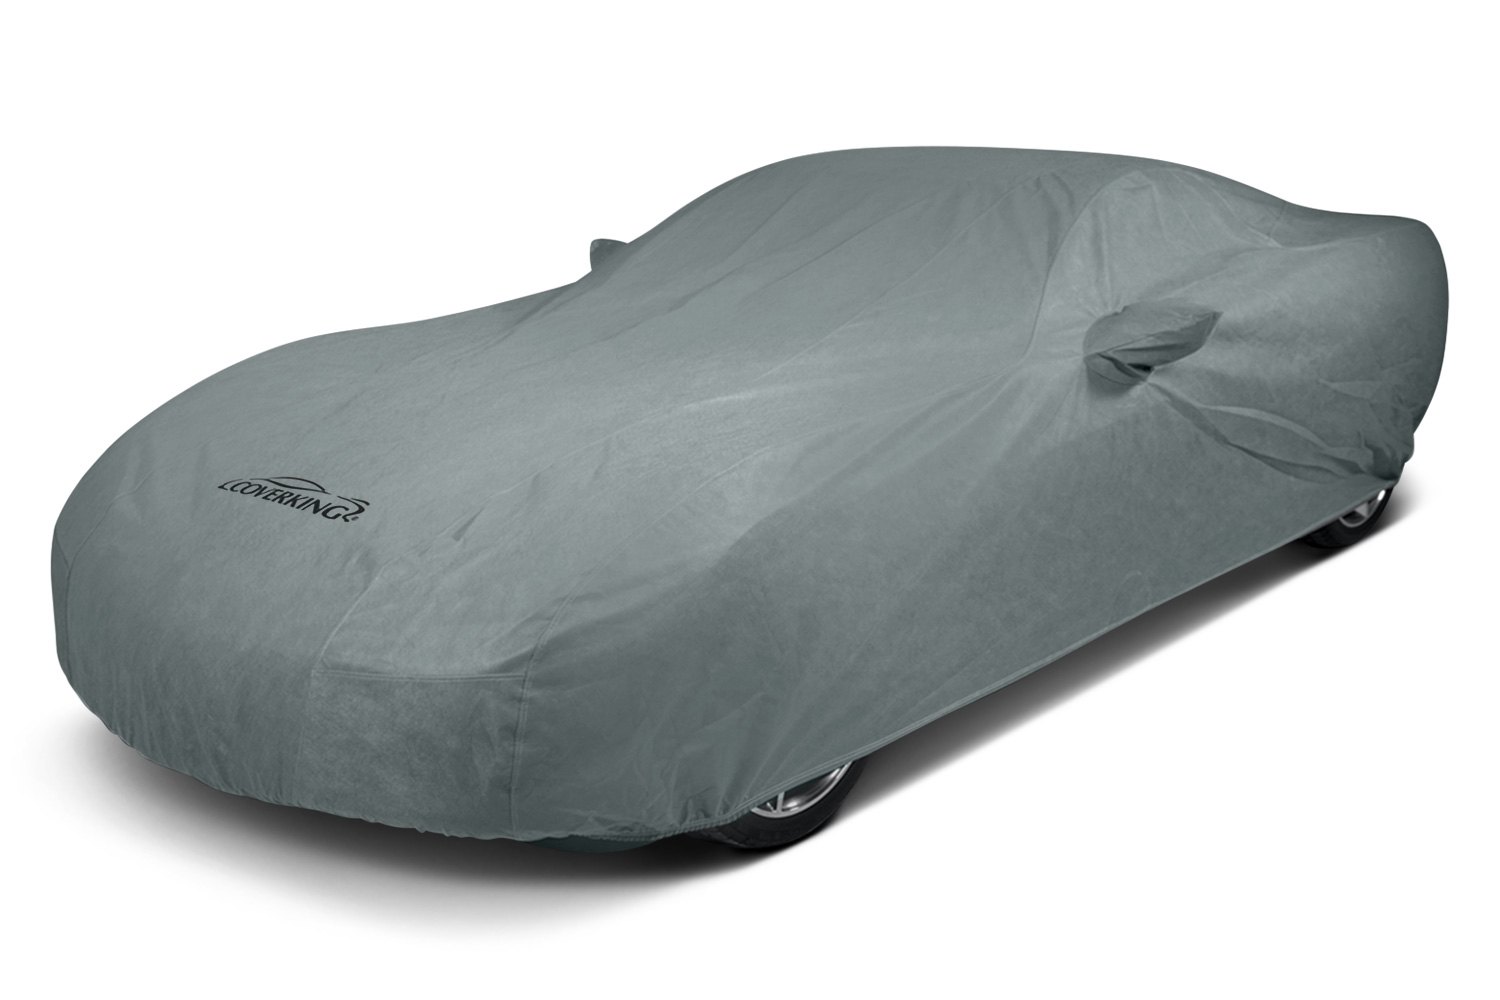 Car Cover Triguard For Pontiac Solstice Coverking Custom Fit